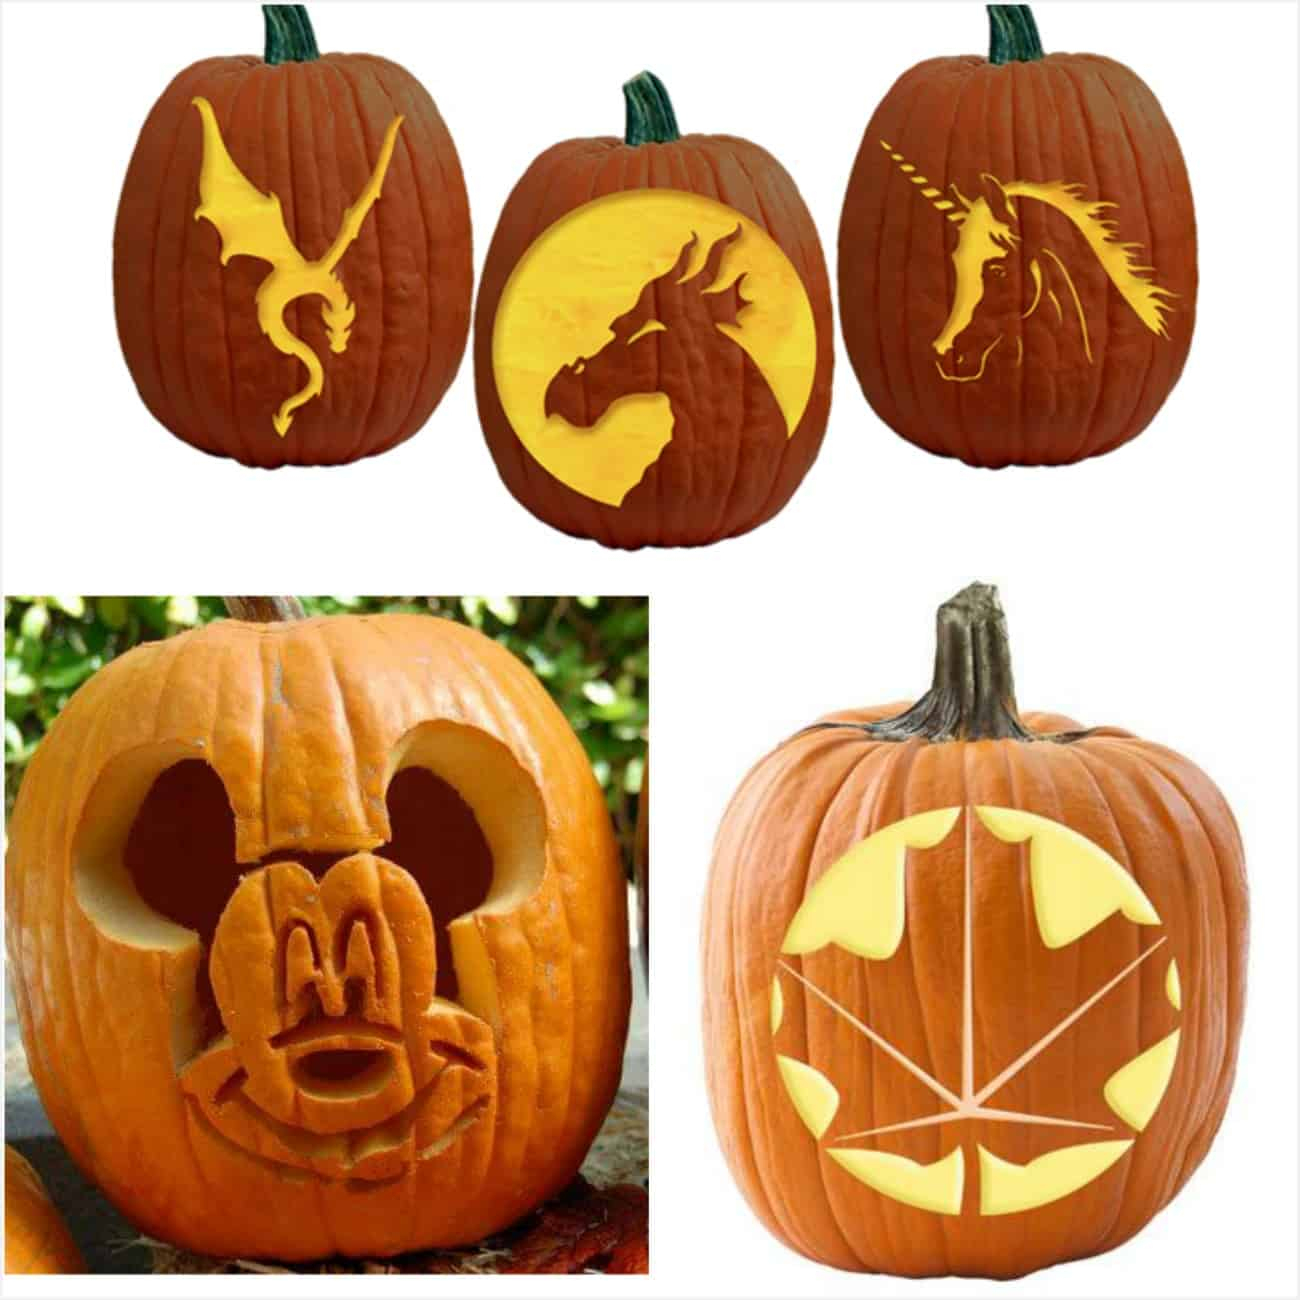 700 Free Pumpkin Carving Patterns And Printable Pumpkin Templates! - Free Online Pumpkin Carving Patterns Printable